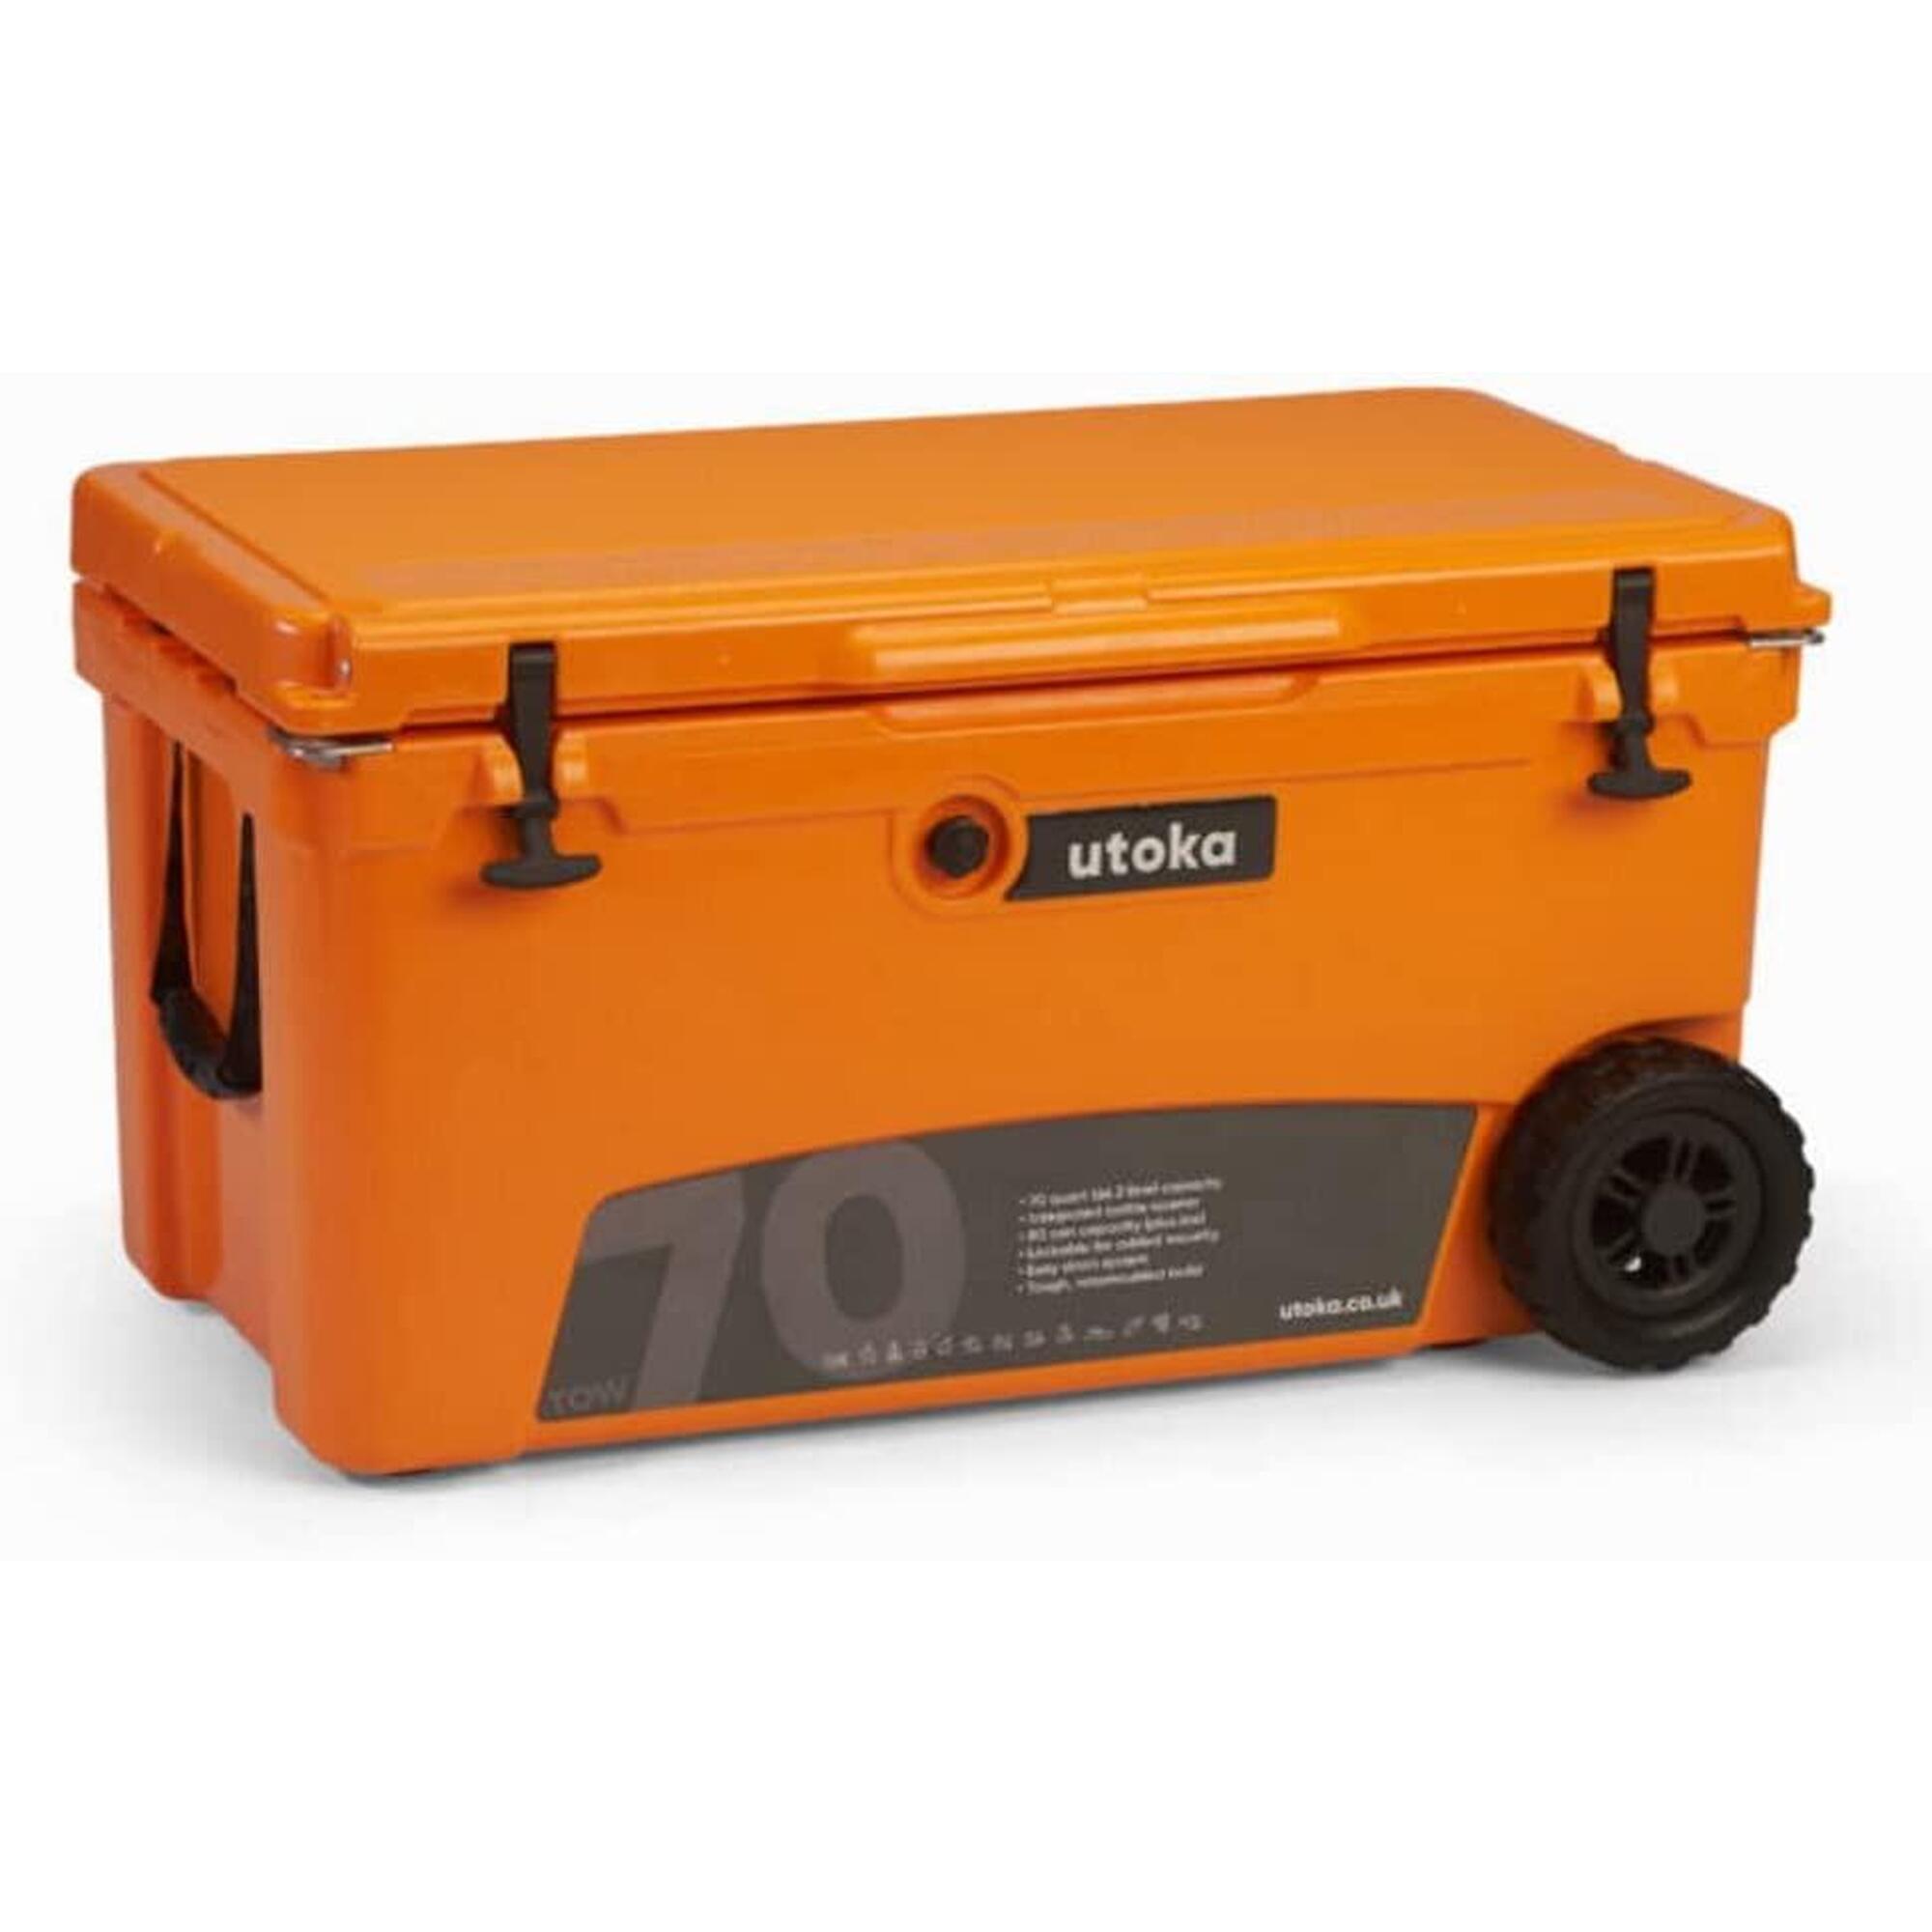 UTOKA Utoka Tow 70 Cool Box, Portable Heavy Duty Cooler With Robust Wheels - Orange